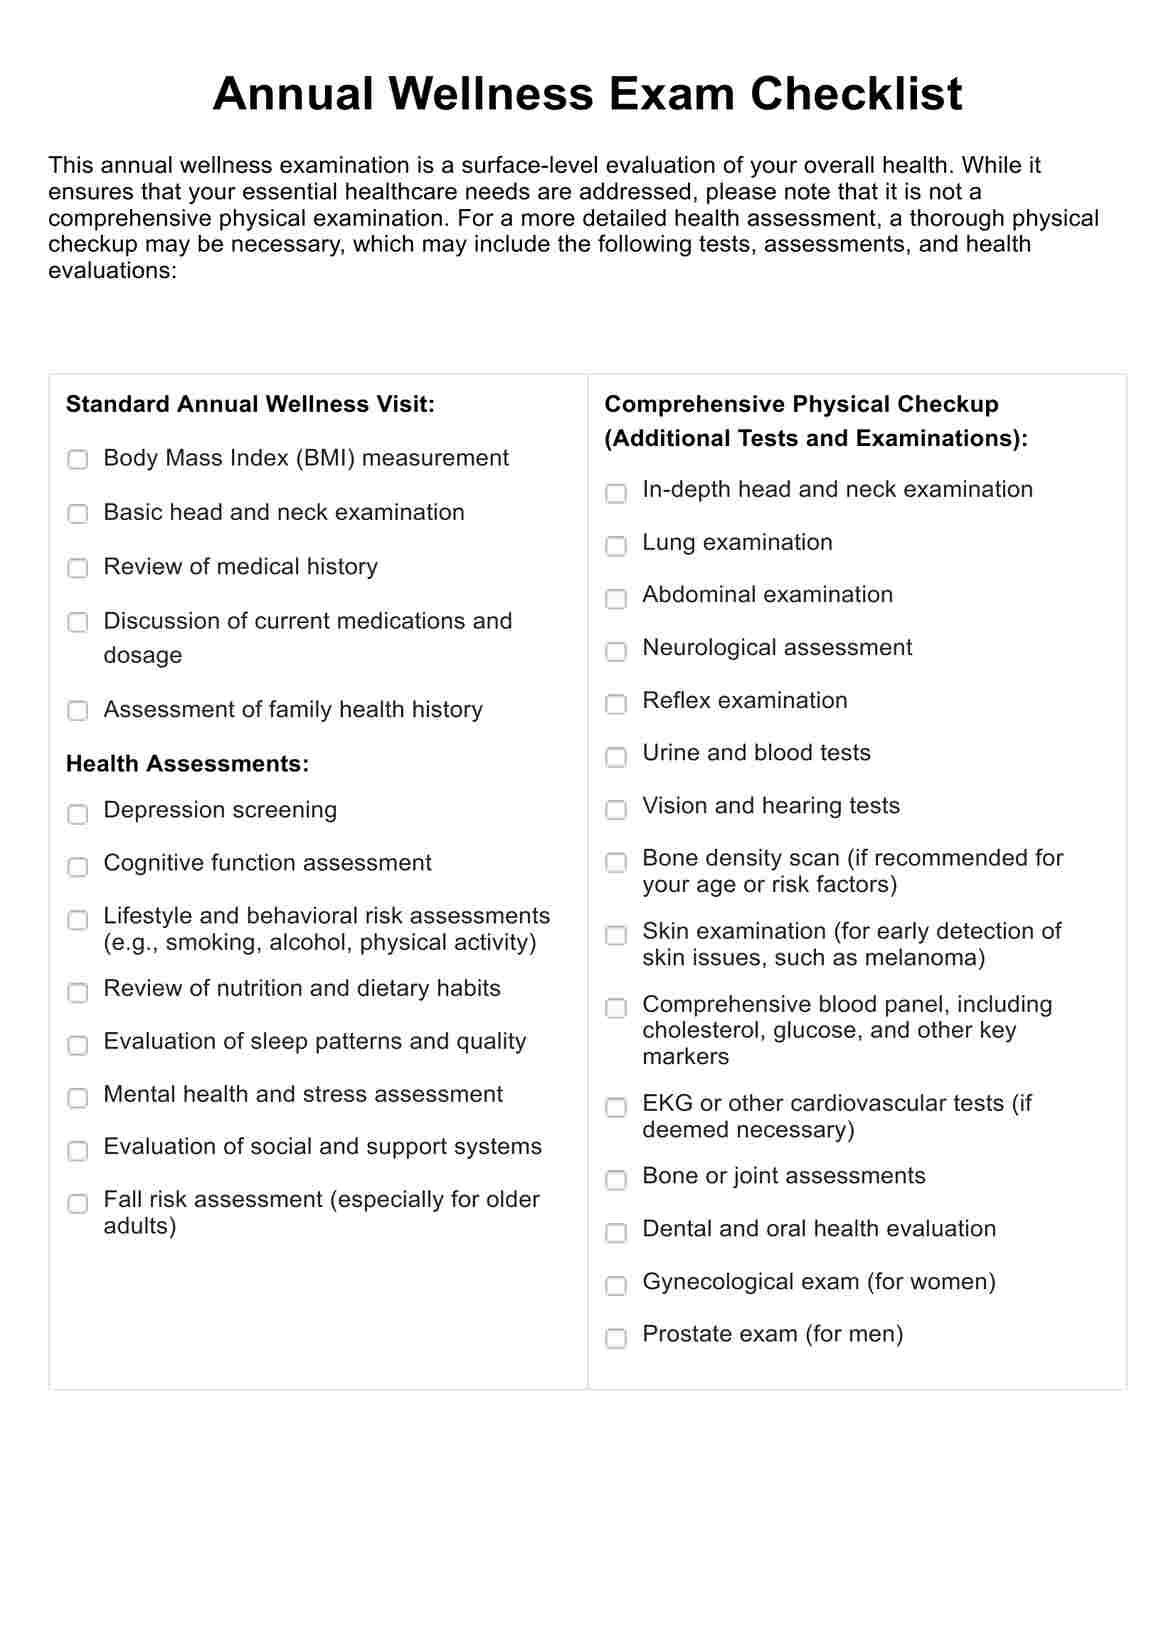 Annual Wellness Exam PDF Example